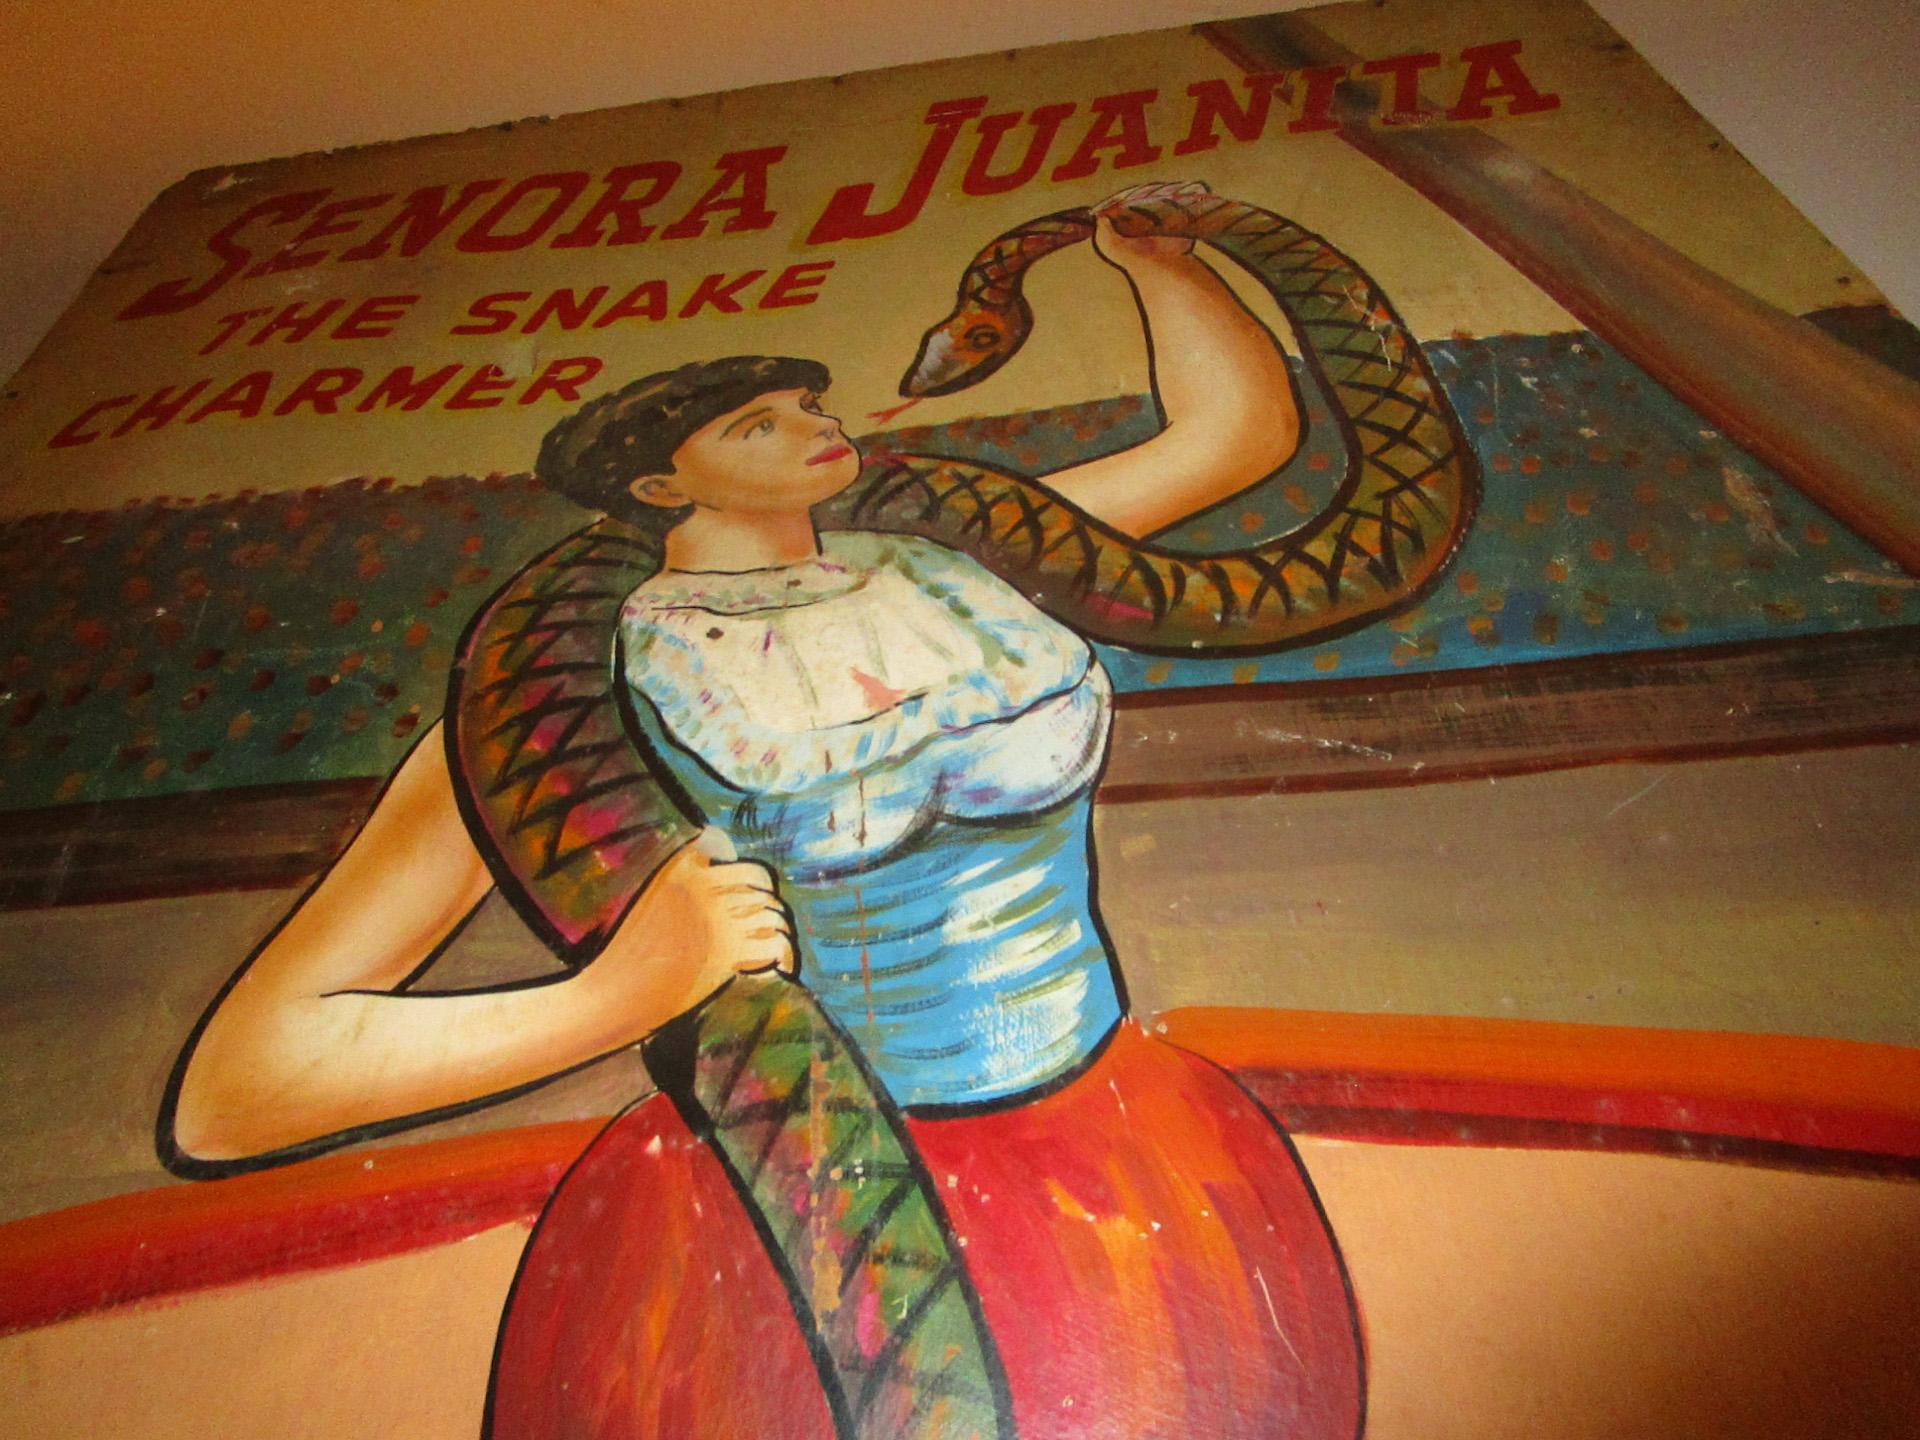 Large 1930s Carnival Sideshow Painting on Wood Senora Juanita the Snake Charmer 1